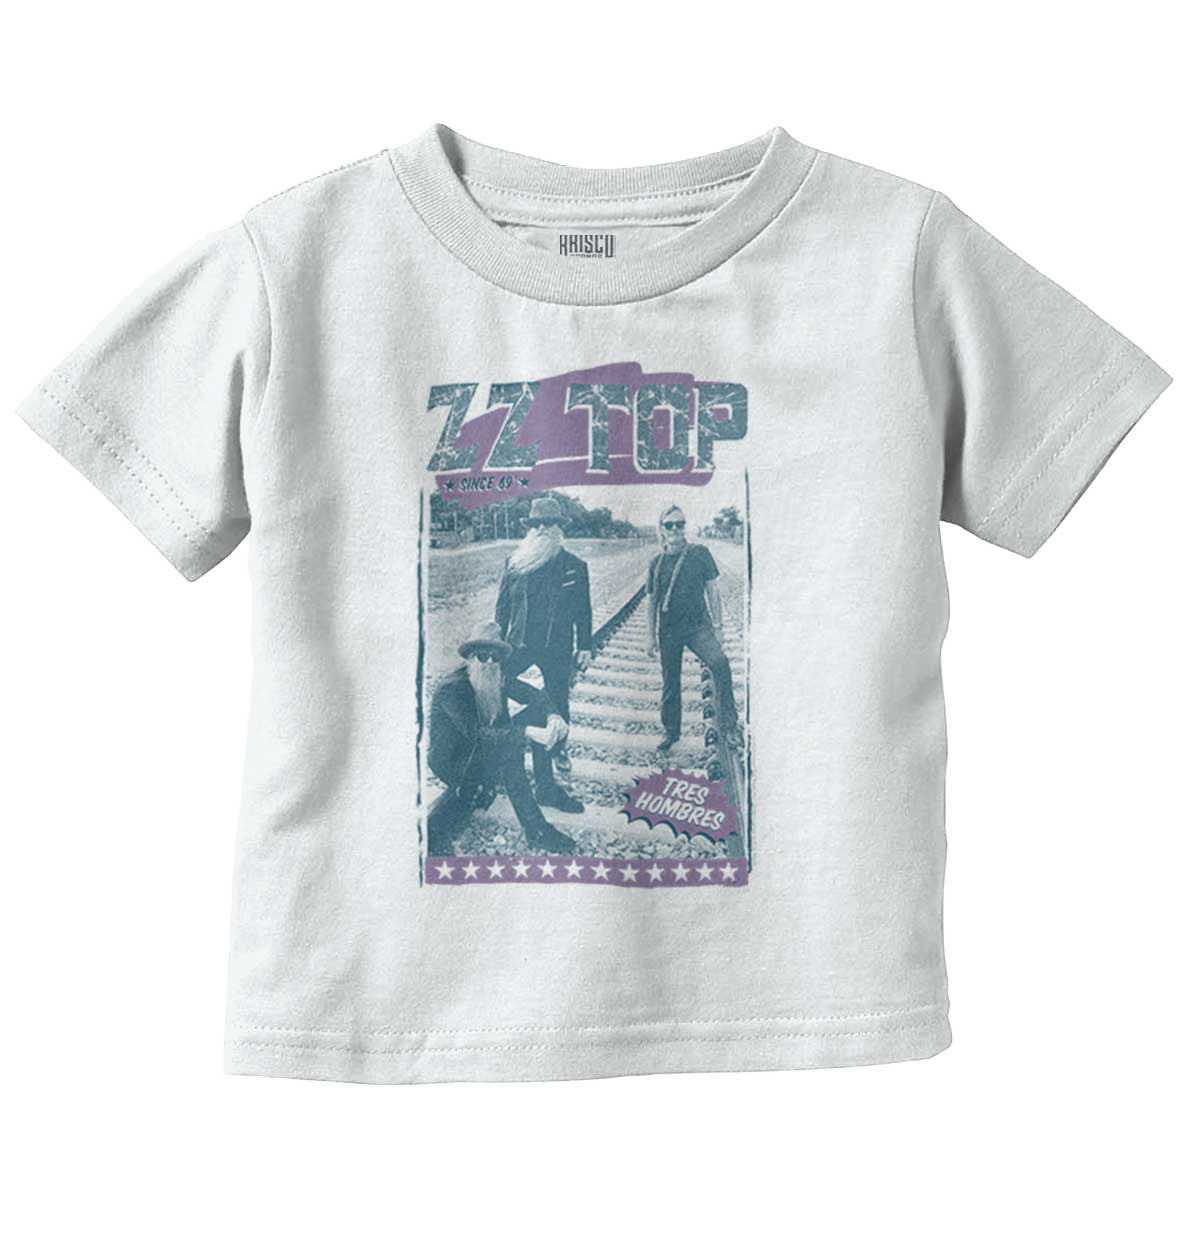 TRES HOMBRES ZZ Top Classic Rock Band Licensed Concert Tour Adult BLACK T-Shirt 